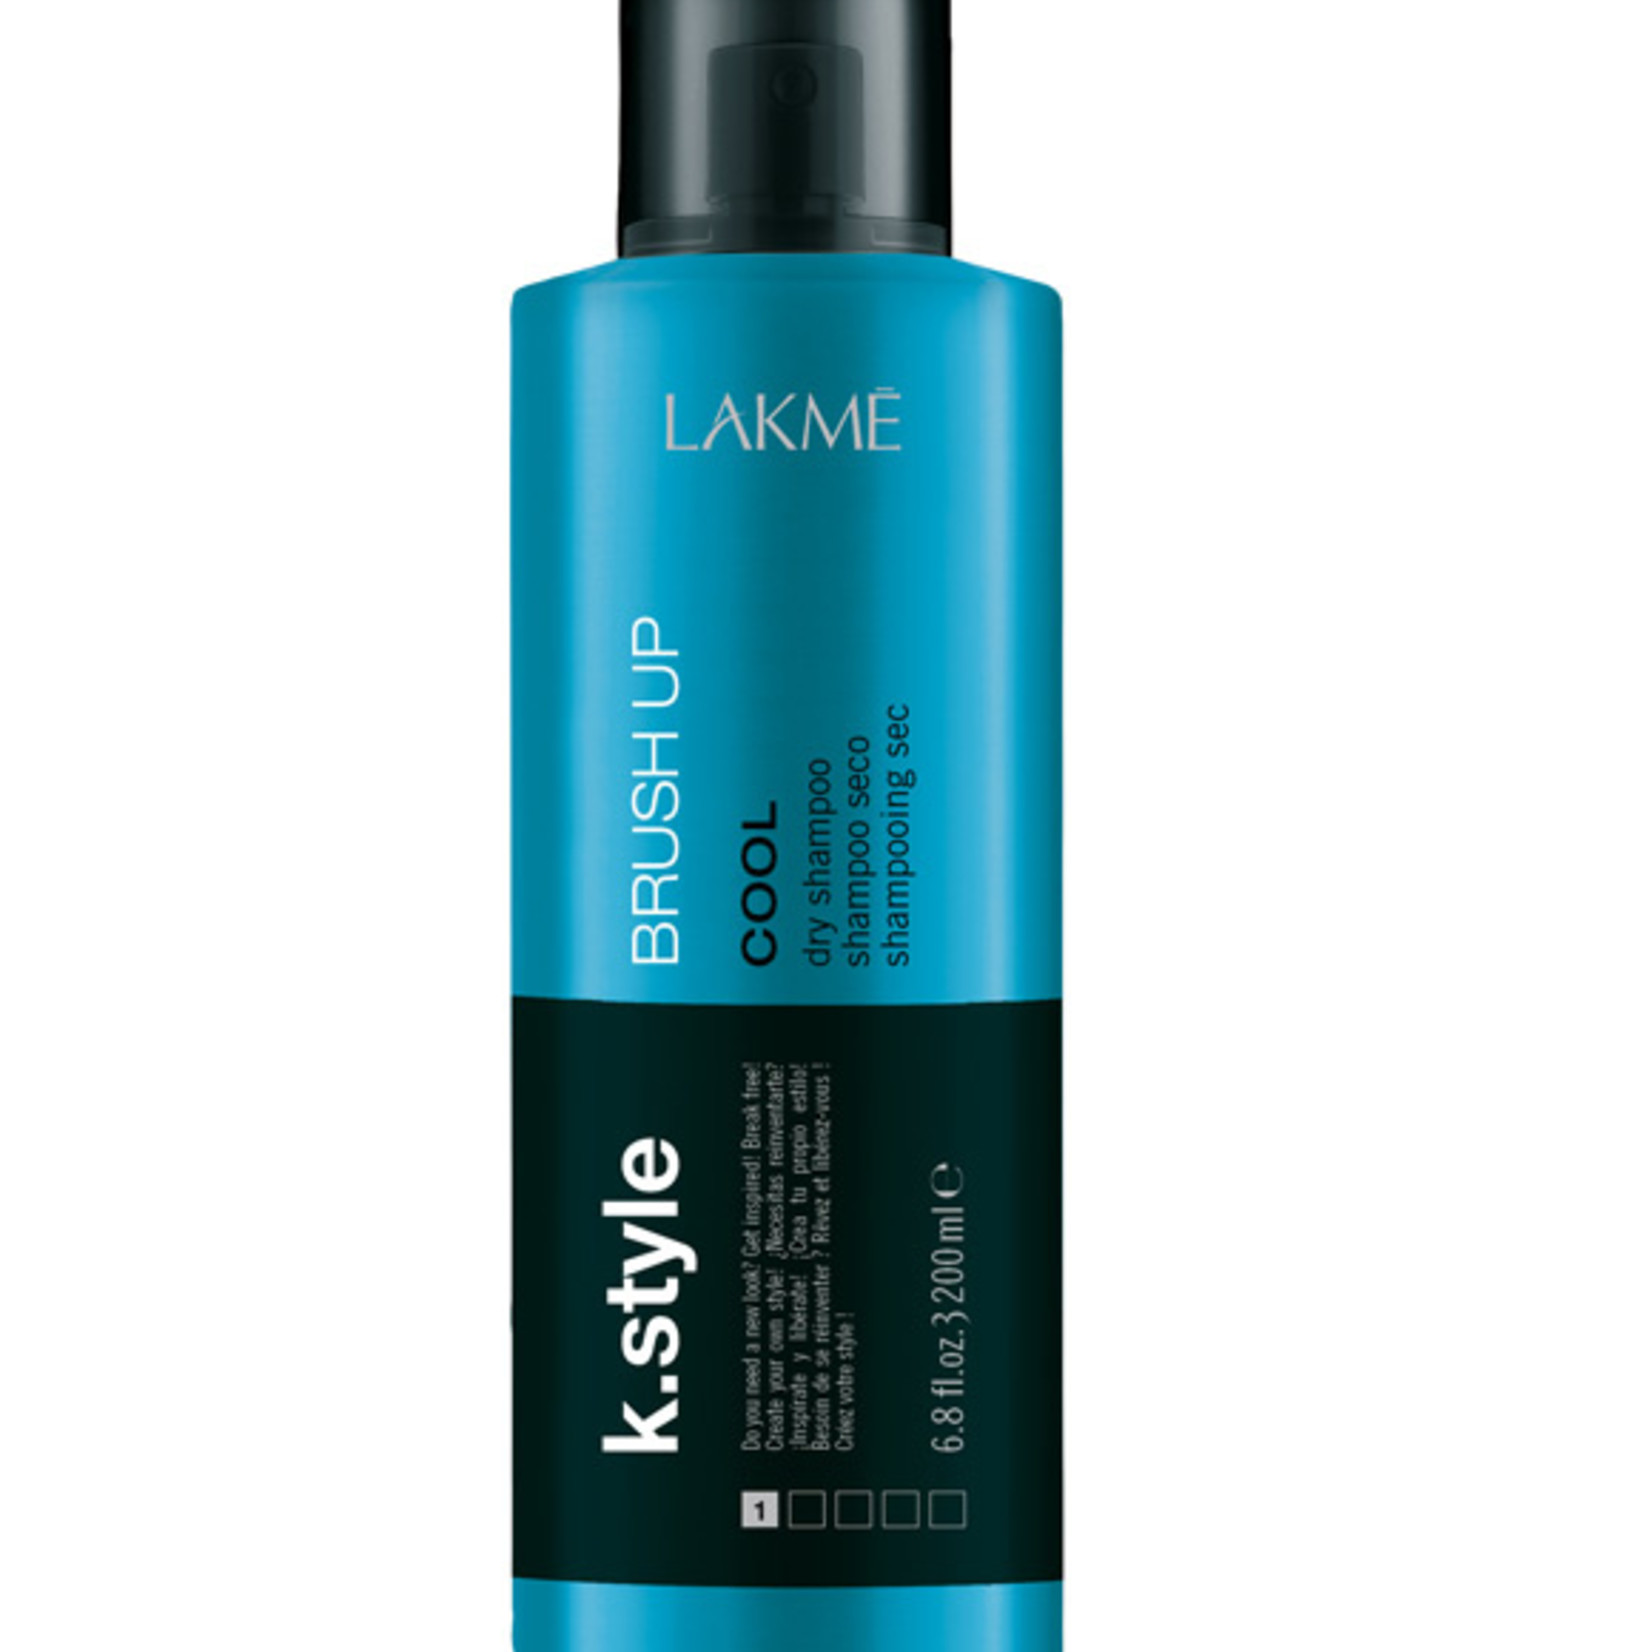 Lakmé KSTY Brush Up Dry Shampoo 200ml